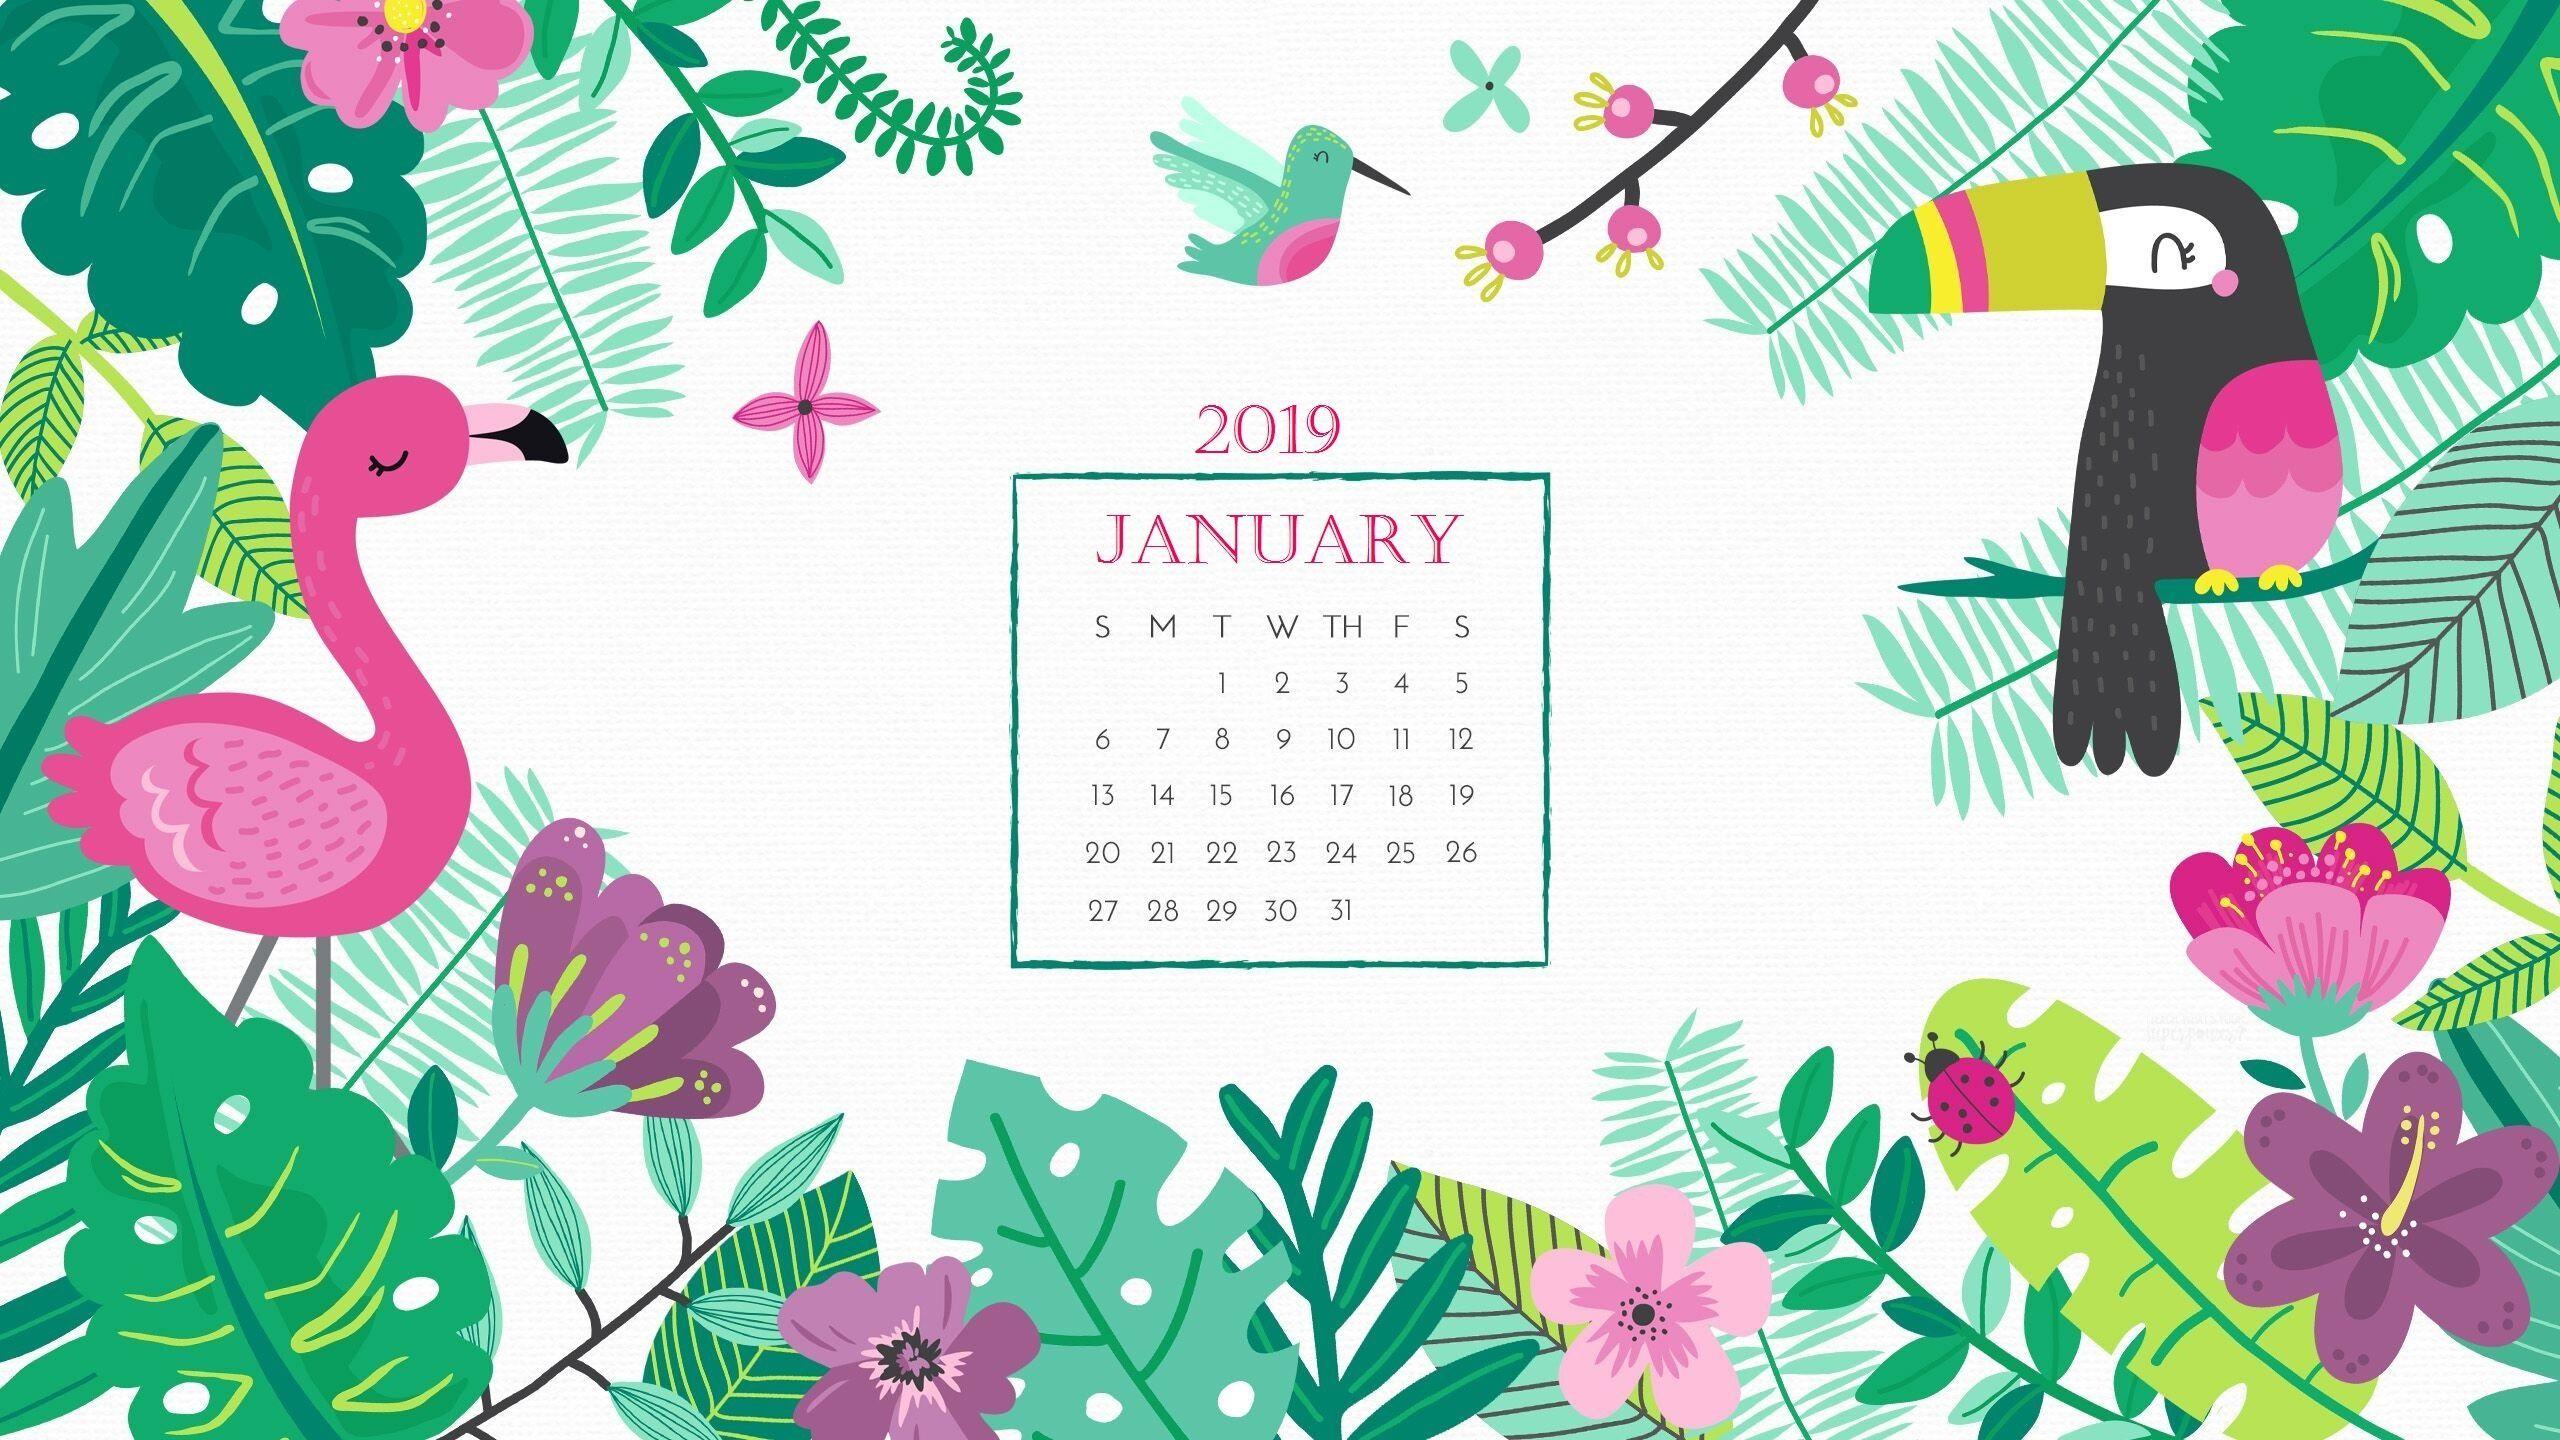 january 2019 calendar wallpaper calendar 2018january 2019 desktop